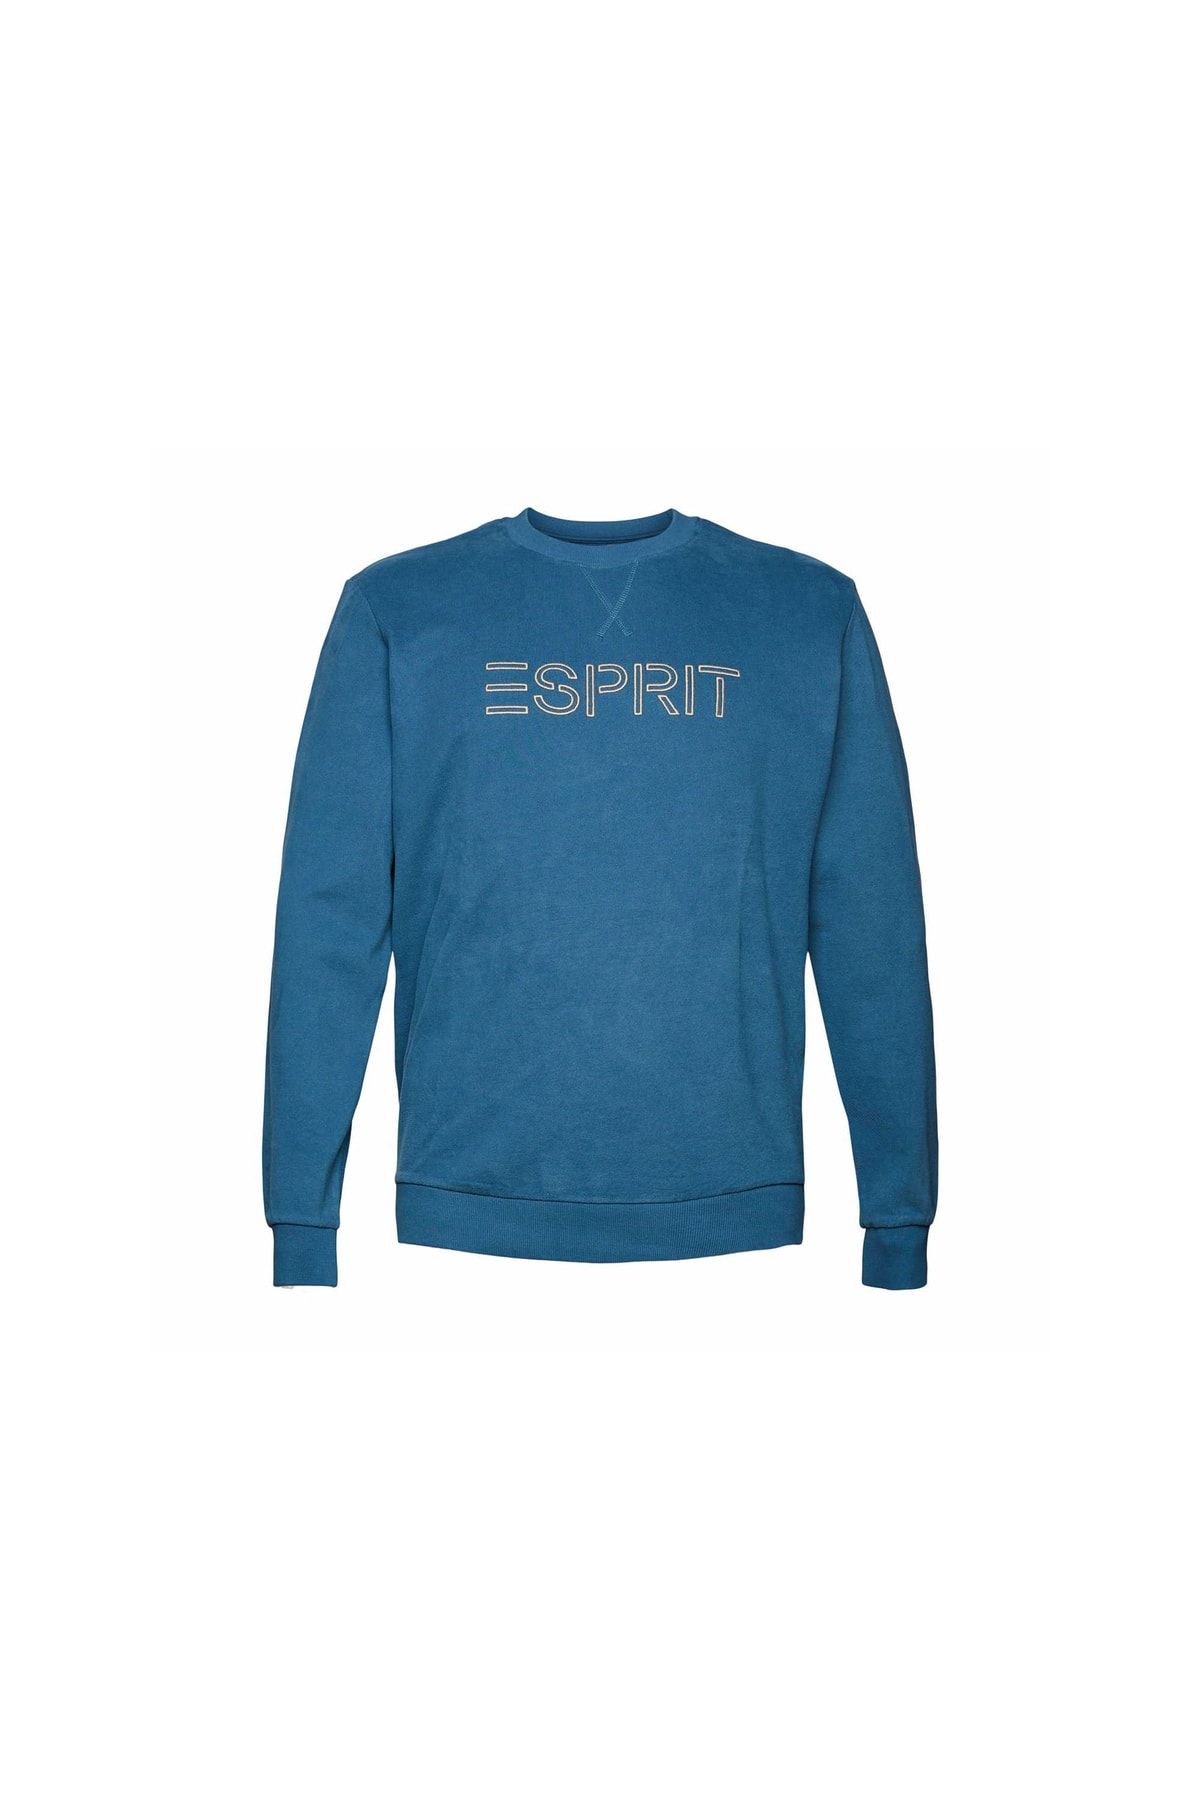 - Blau - Fit - Esprit Regular Trendyol Pullover